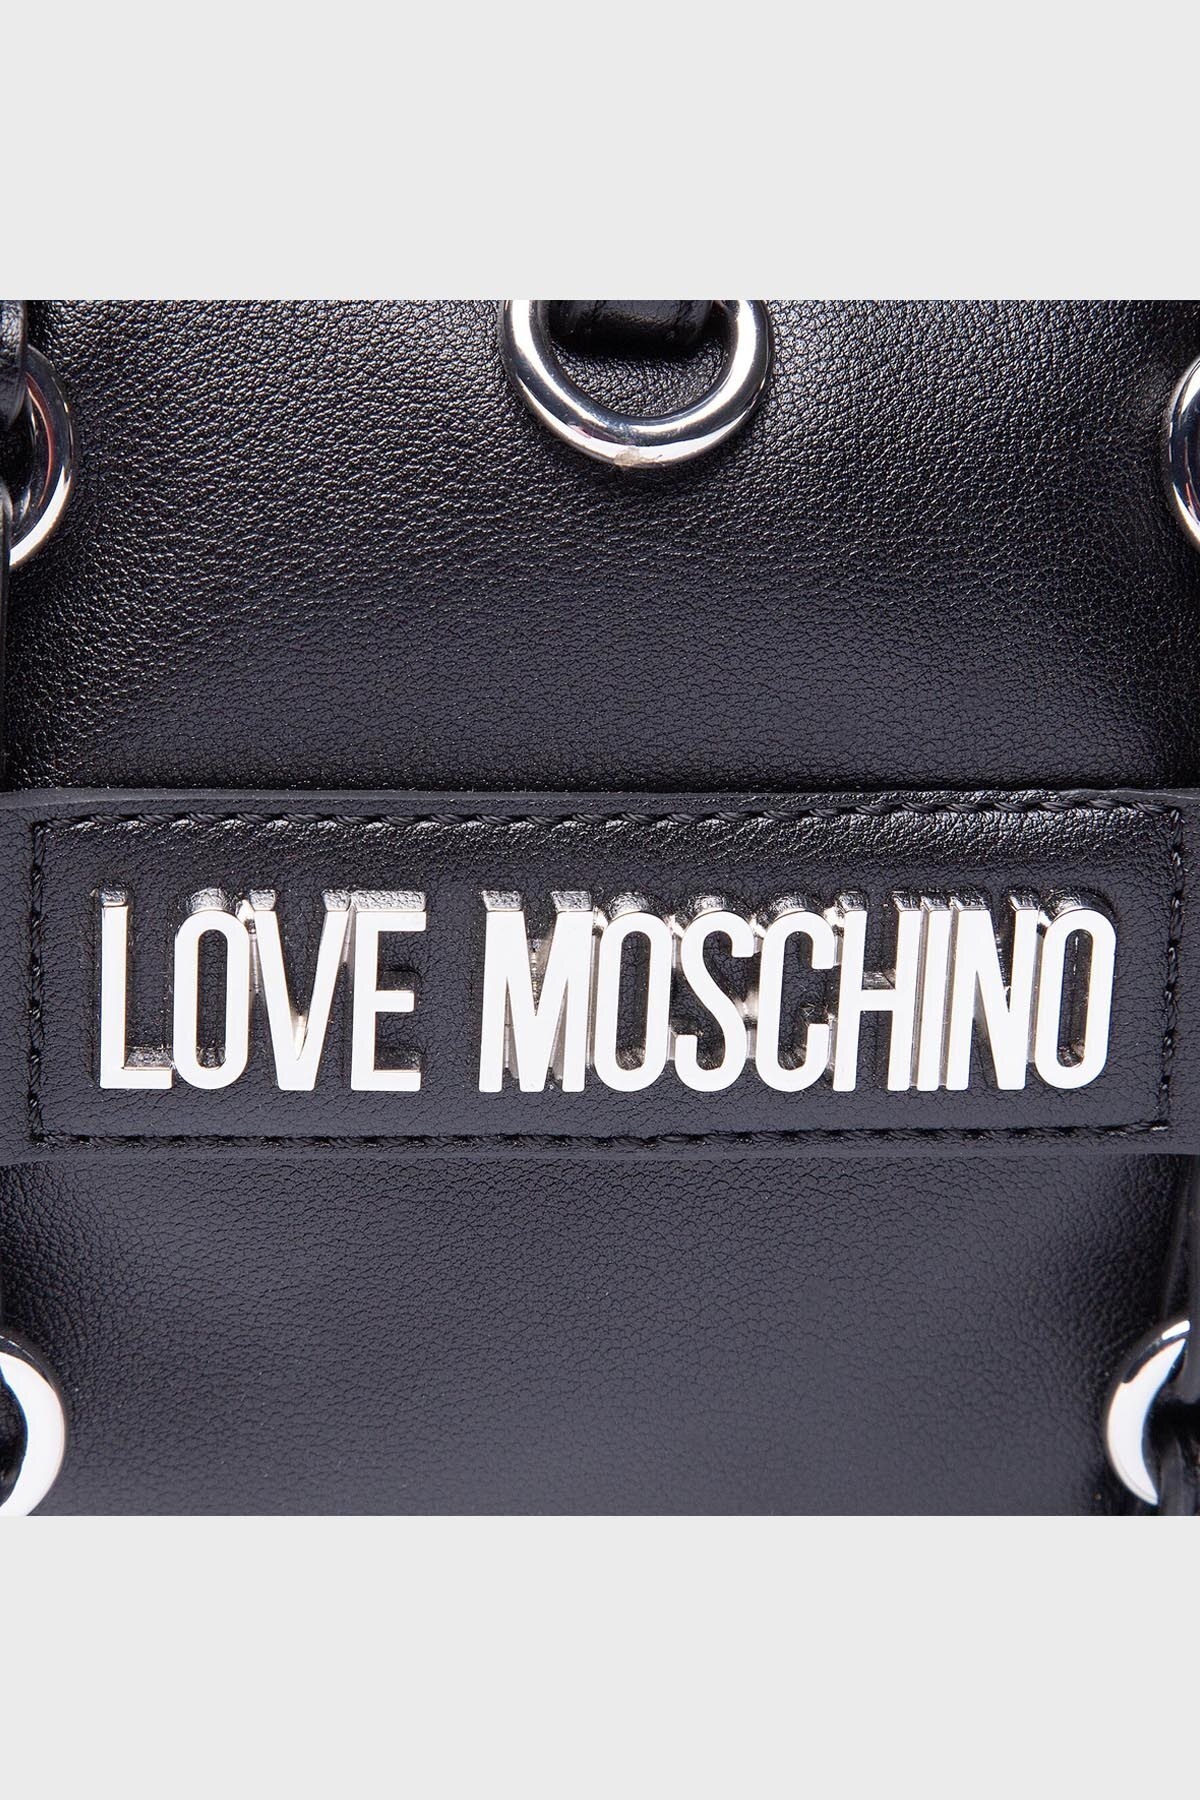 Love Moschino Marka Logolu Ayarlanabilir Askılı Bayan Çanta JC4143PP1DLD0000 SİYAH